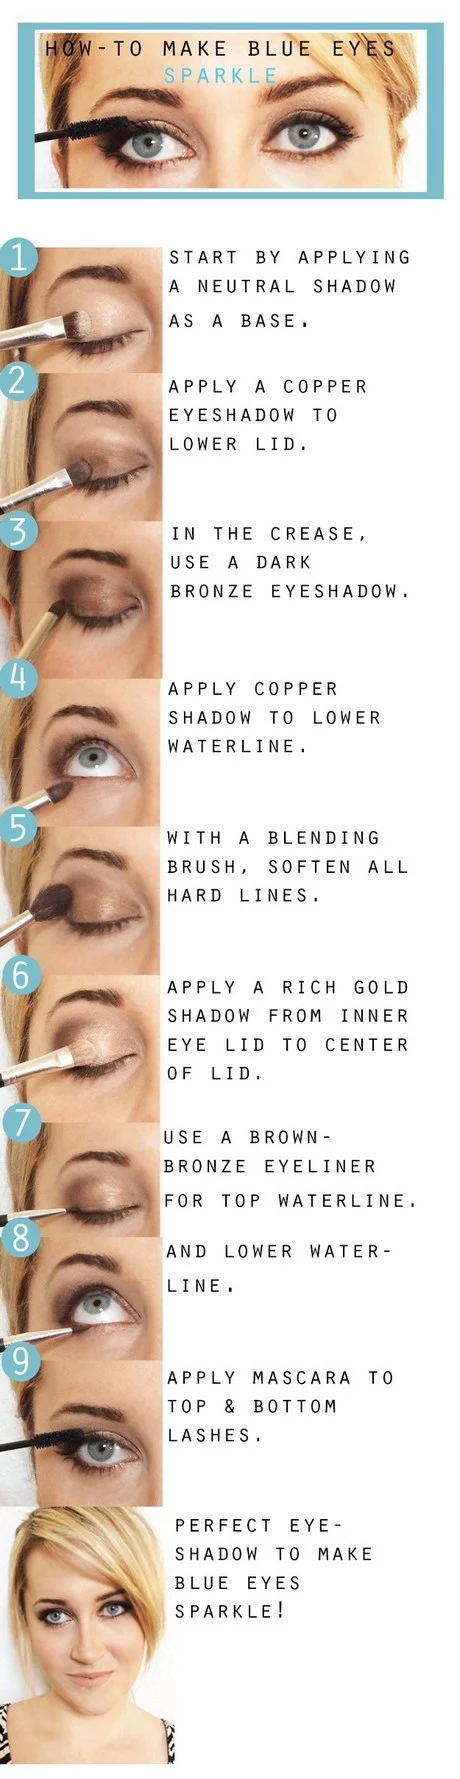 makeup-for-blue-eyes-tutorial-36_4-11 Make-up voor blauwe ogen tutorial